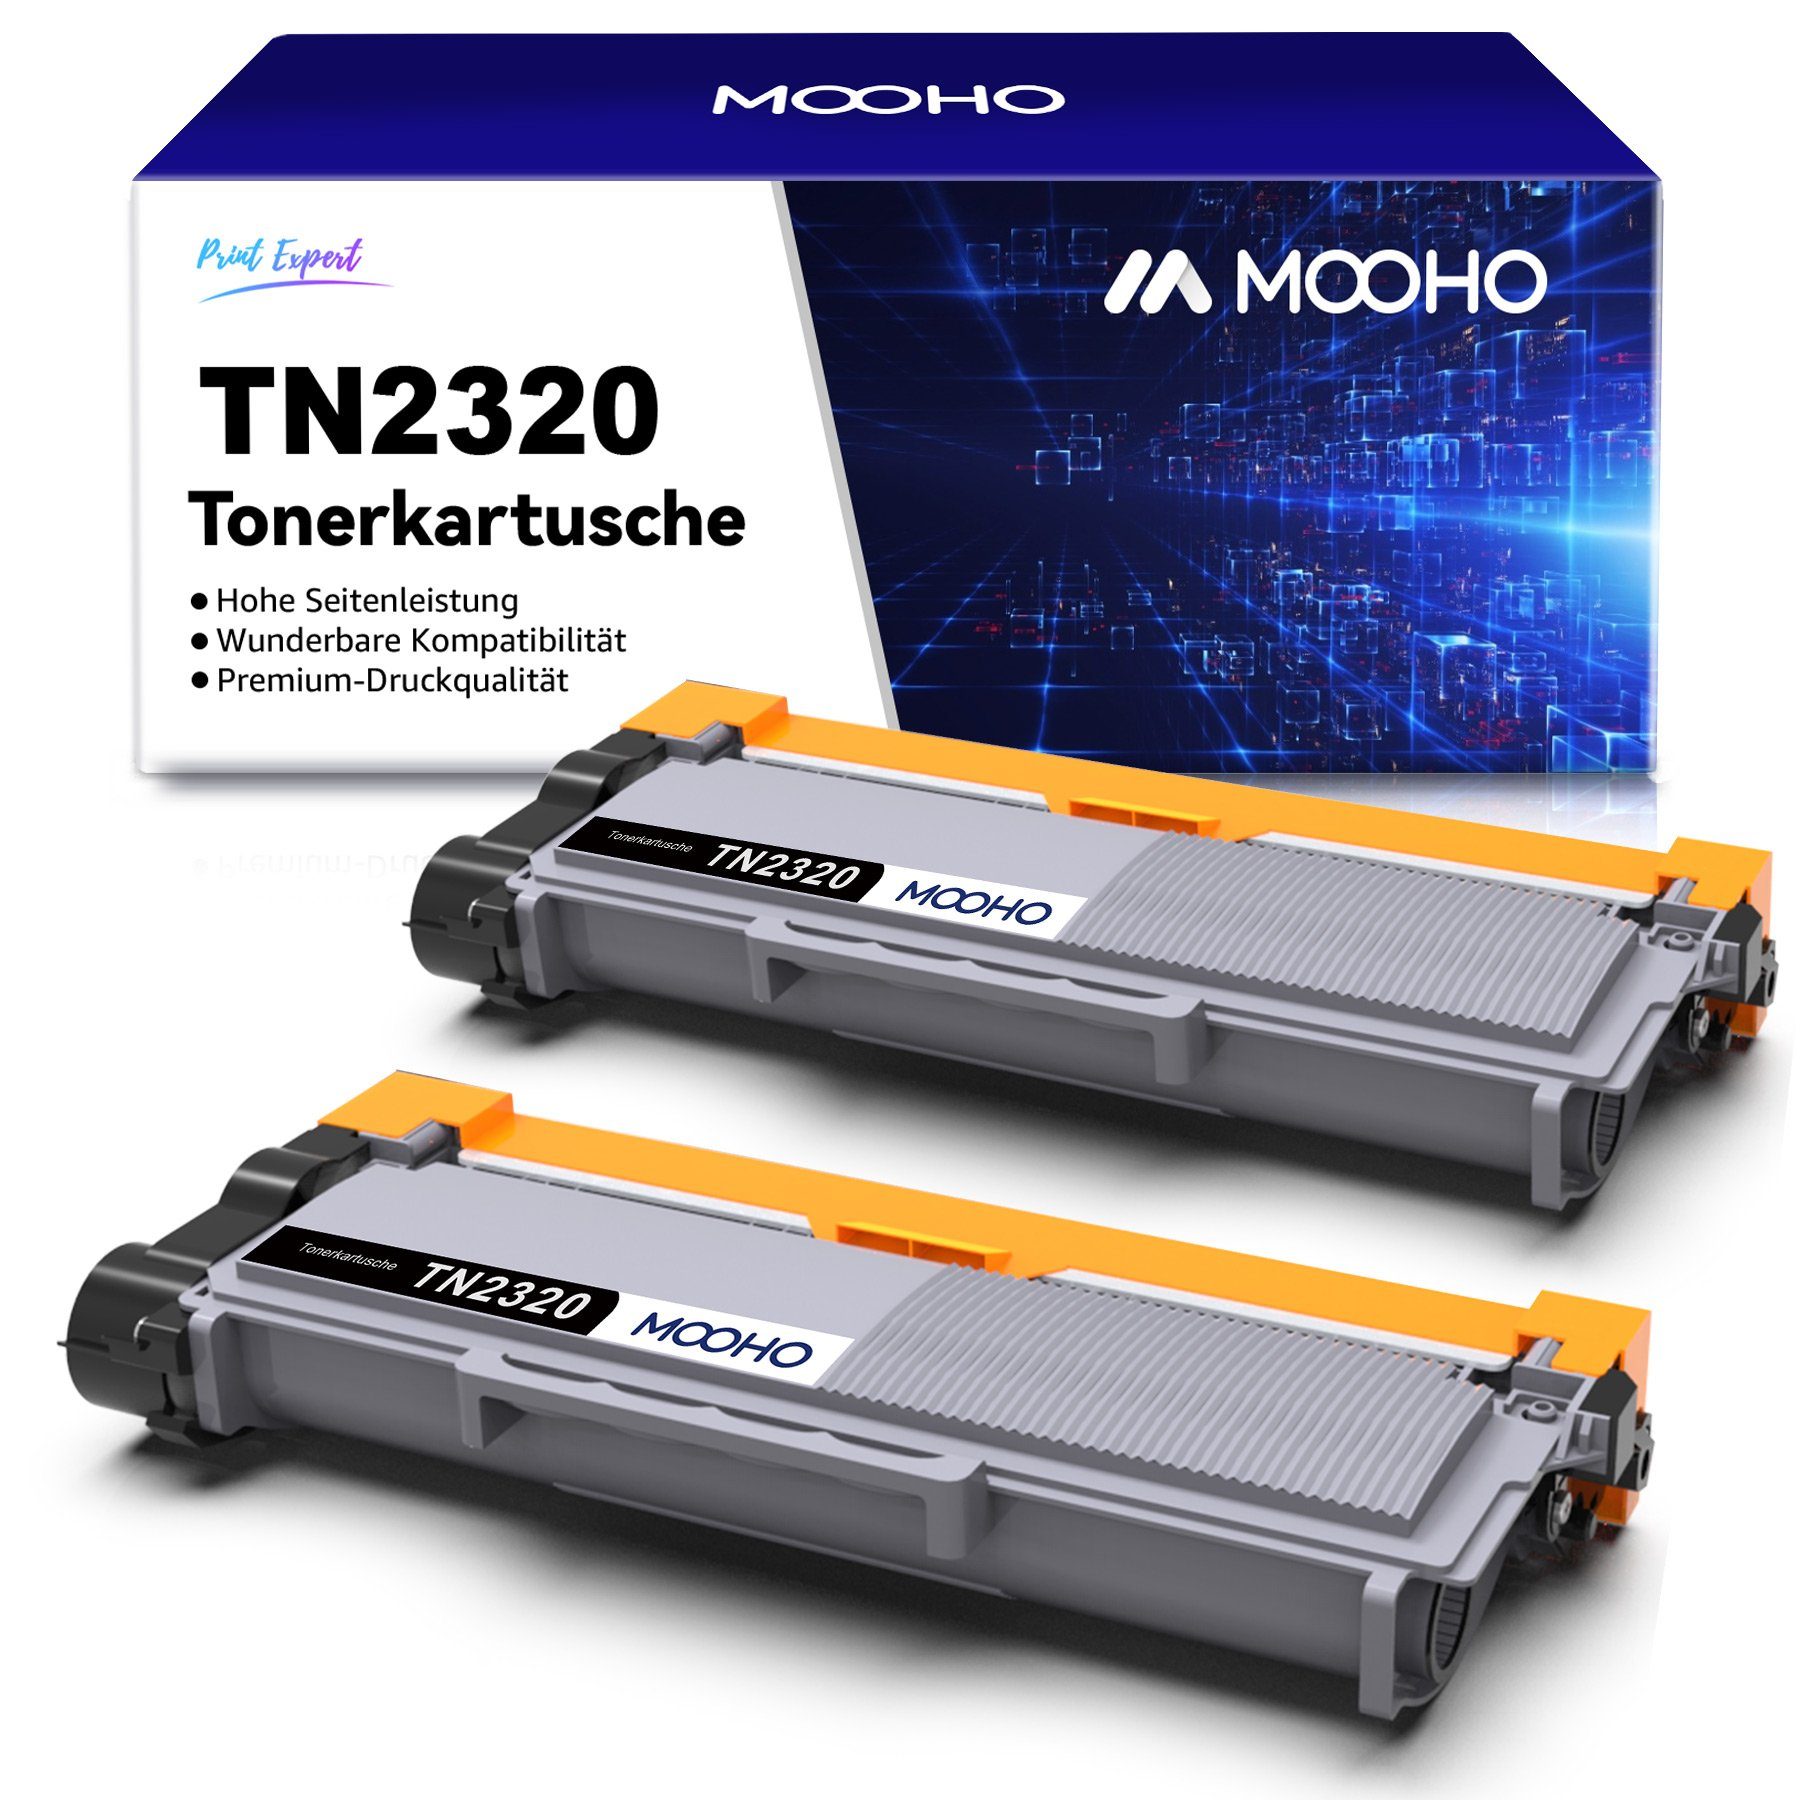 Kompatibel 2x MOOHO Tonerpatrone für Brother schwarze TN-2420 TN-1050 TN2320 TN-2220 TN-2320